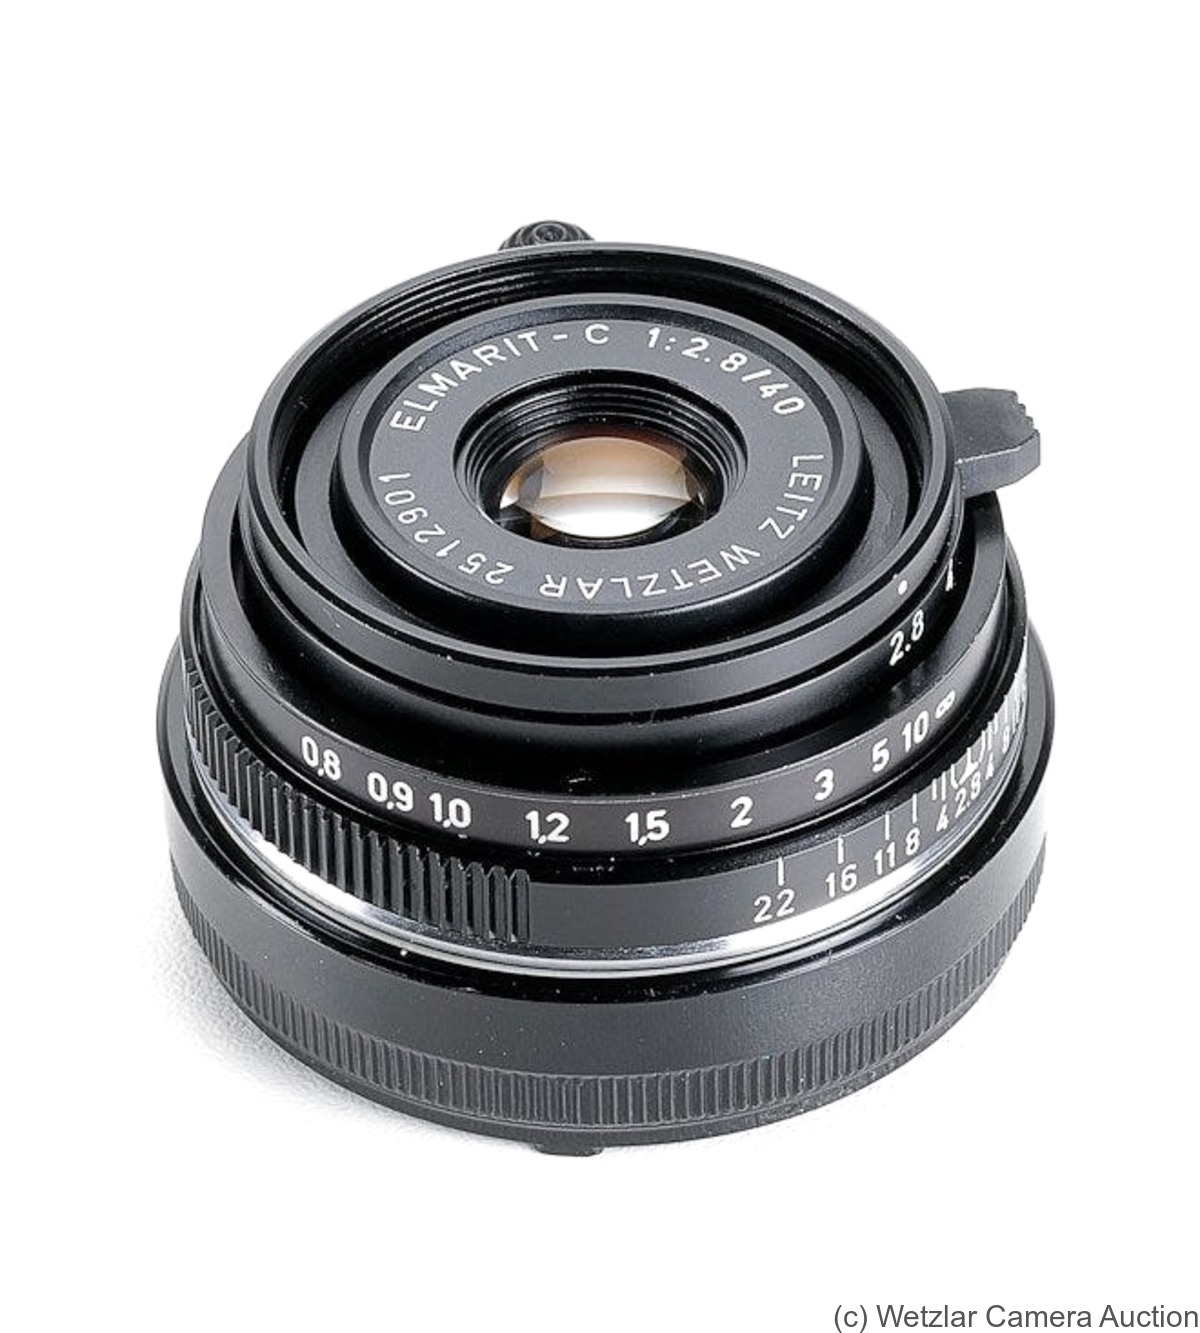 Leitz: 40mm (4cm) f2.8 Elmarit-C (BM) camera